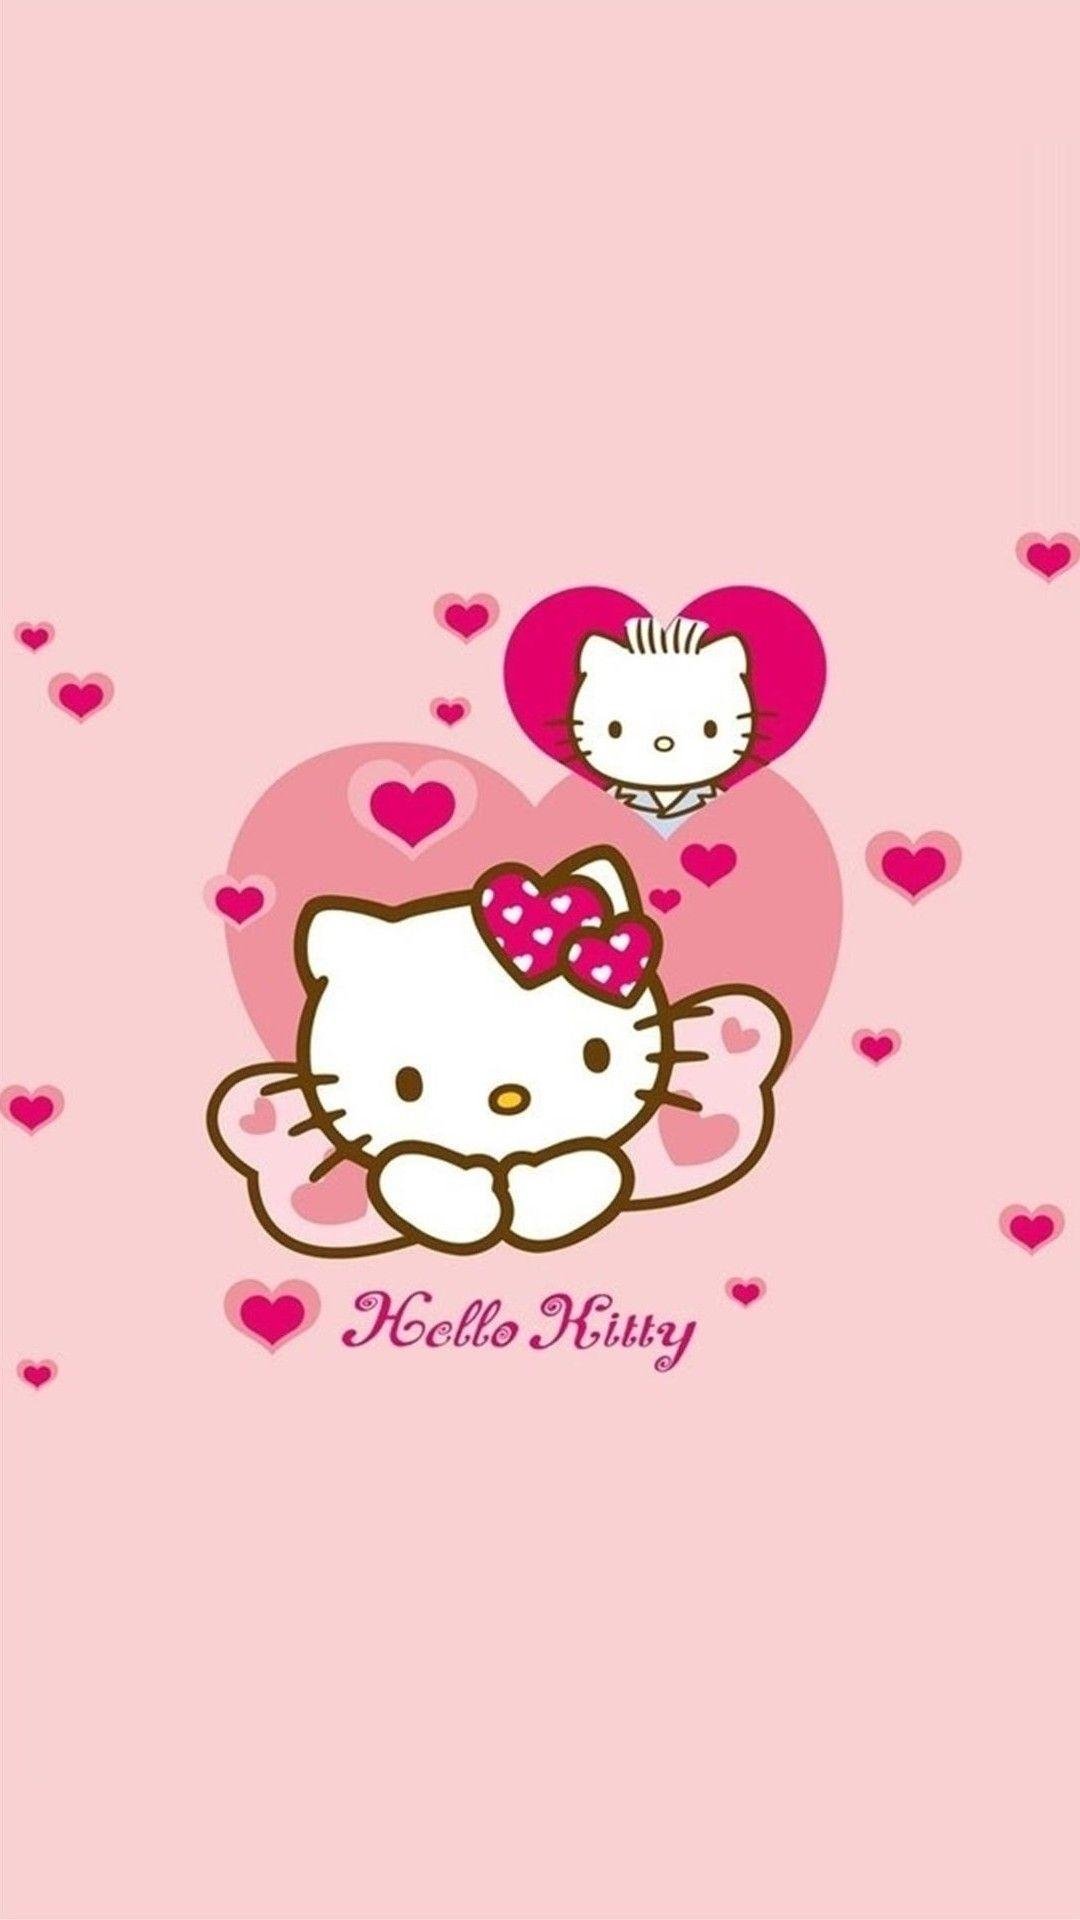 Sanrio Hello Kitty wallpaper  Hello kitty backgrounds Hello kitty  wallpaper Sanrio hello kitty